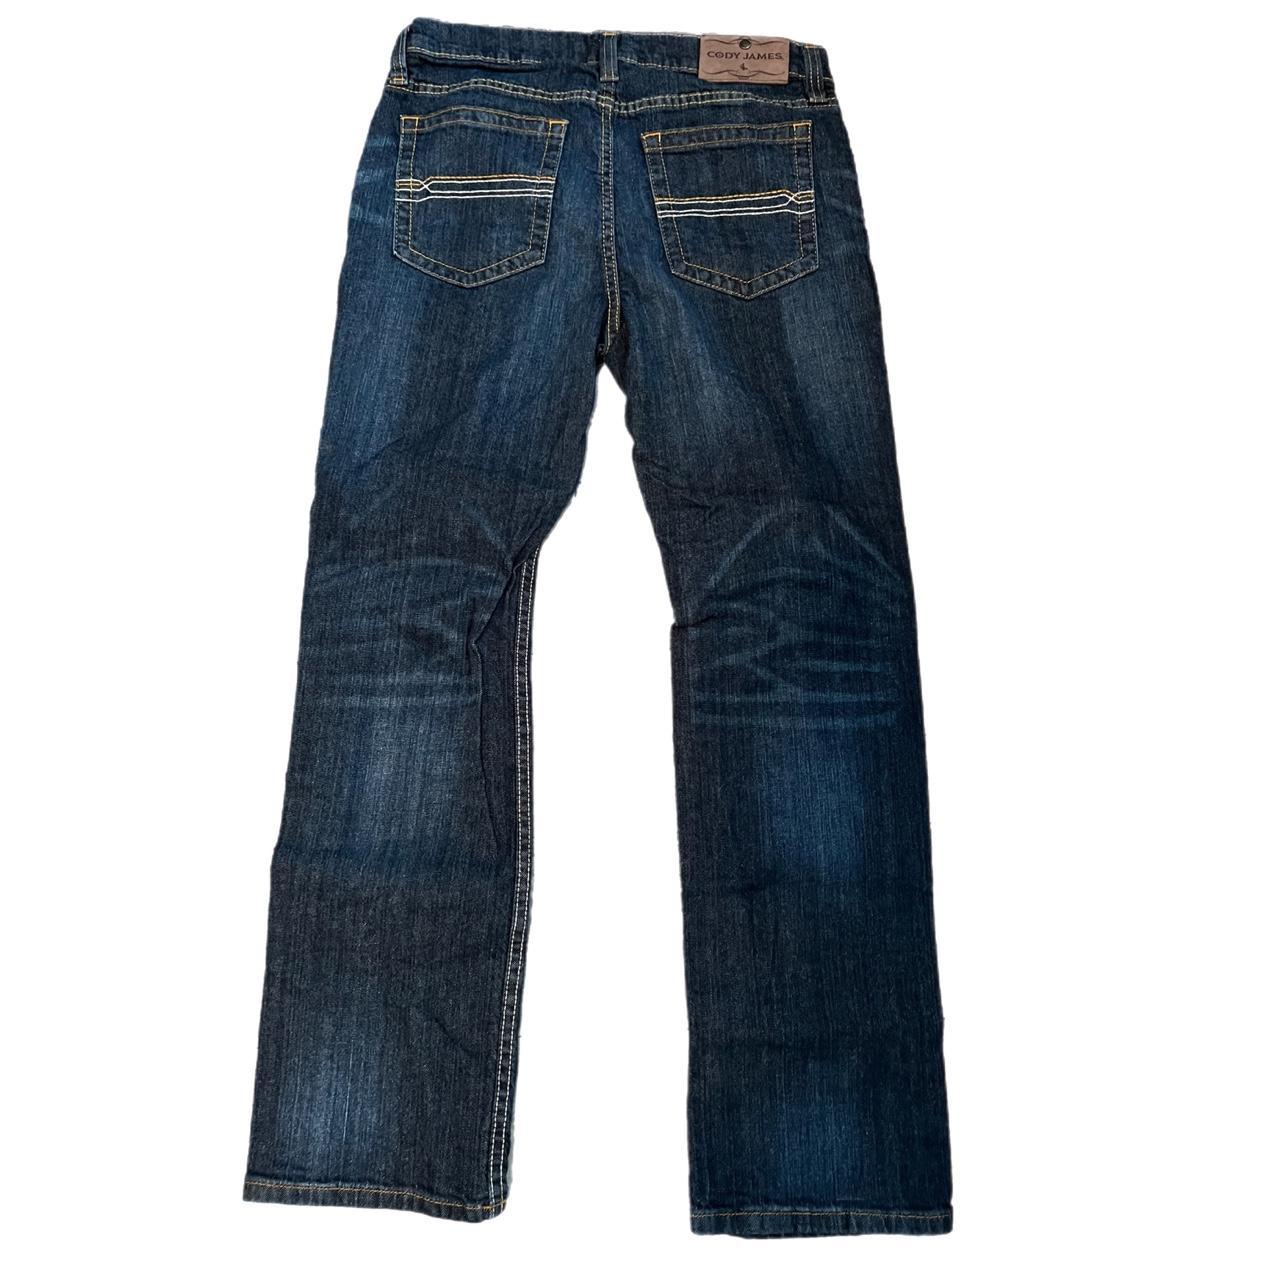 Cody James Men's Navy Jeans (2)